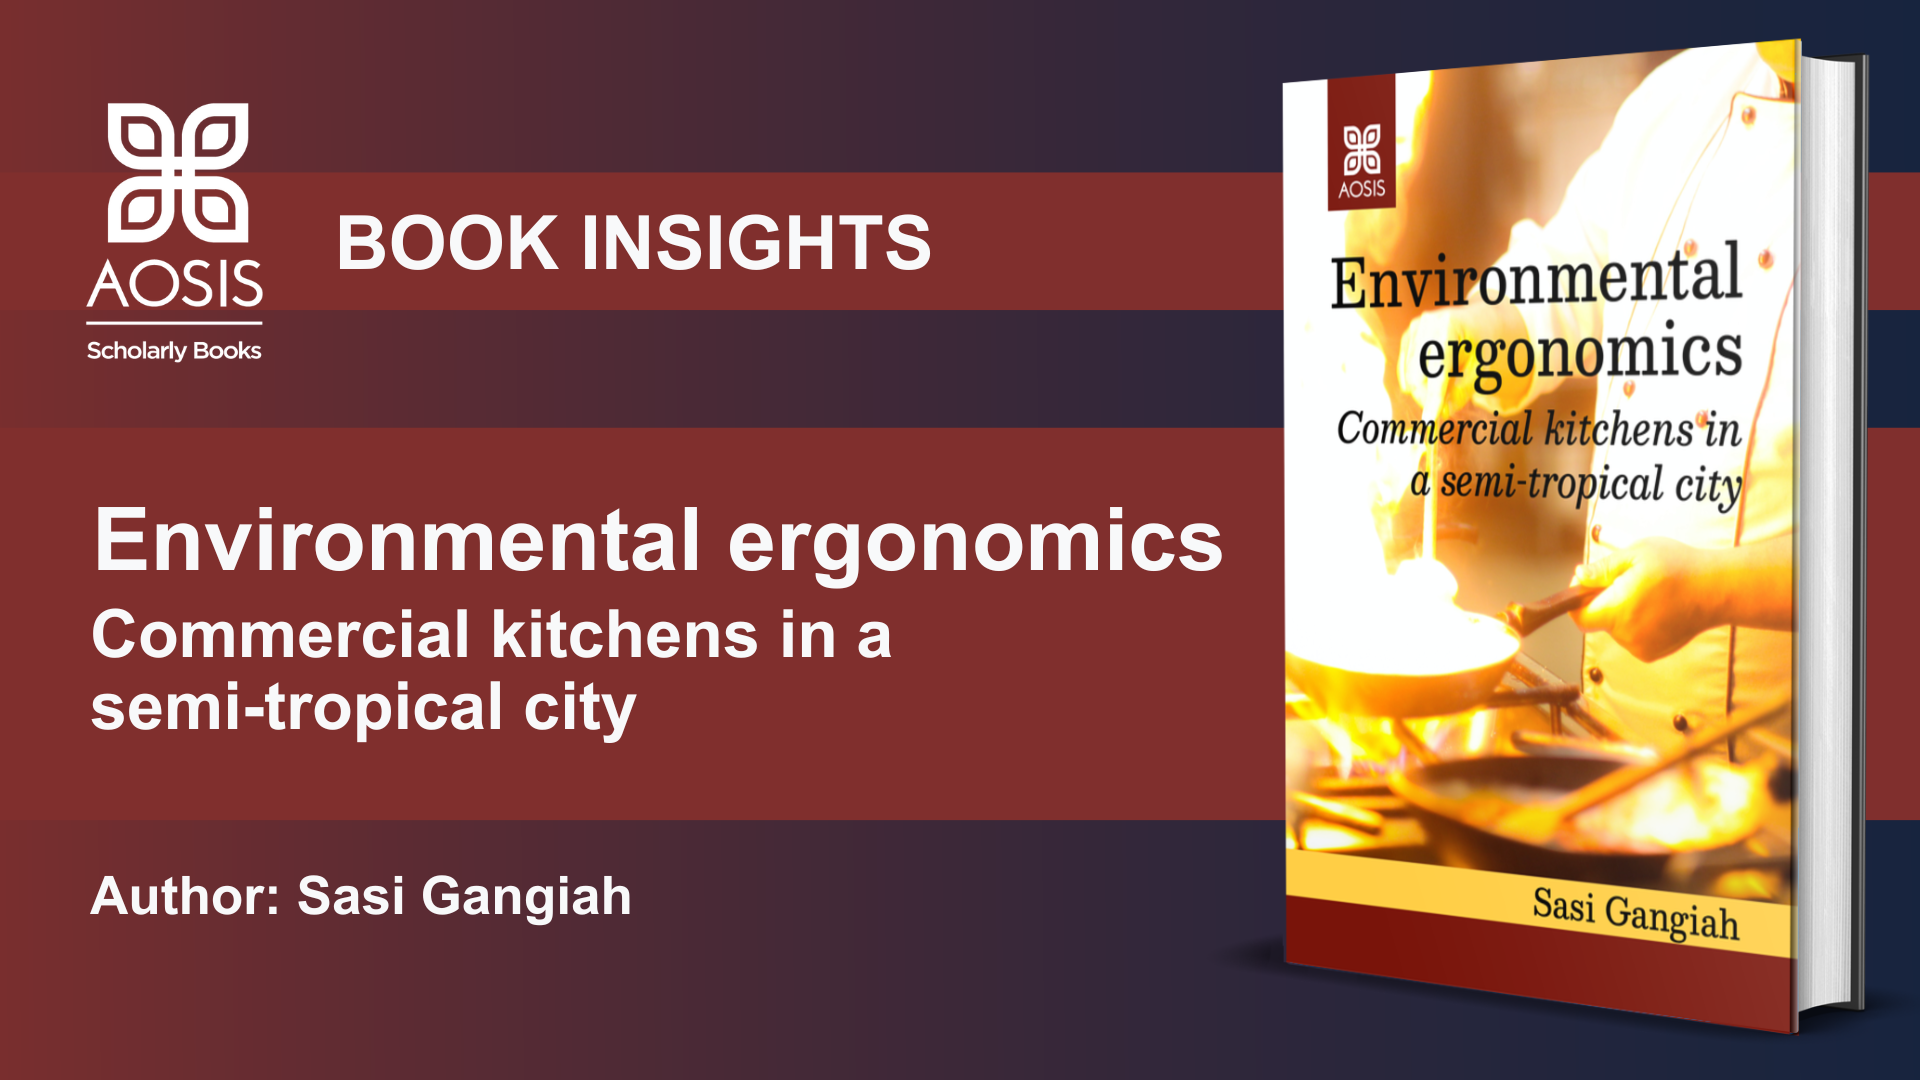 AOSIS Books publishes ‘Environmental ergonomics’ by Sasi Gangiah